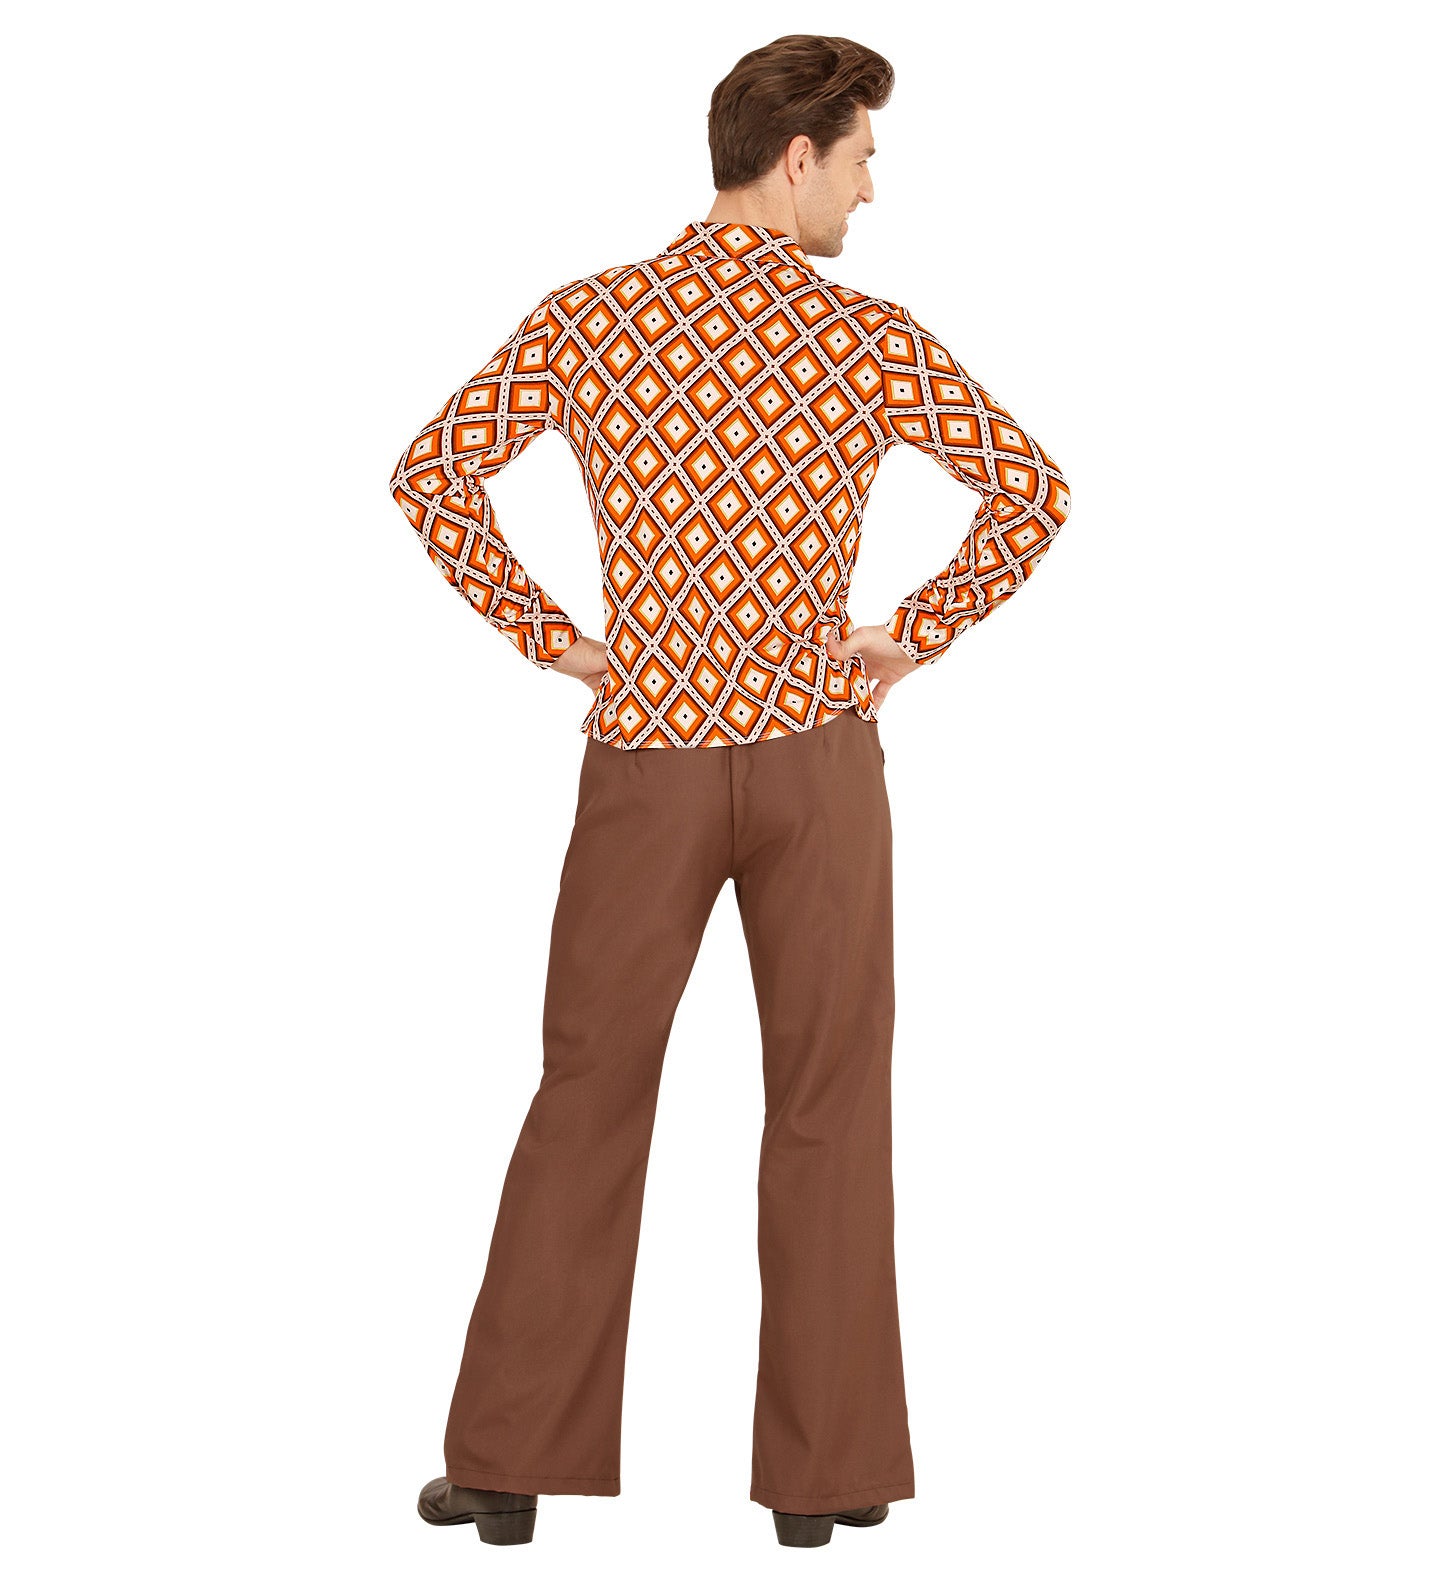 70's Groovy Shirt Rhombus Men's rear